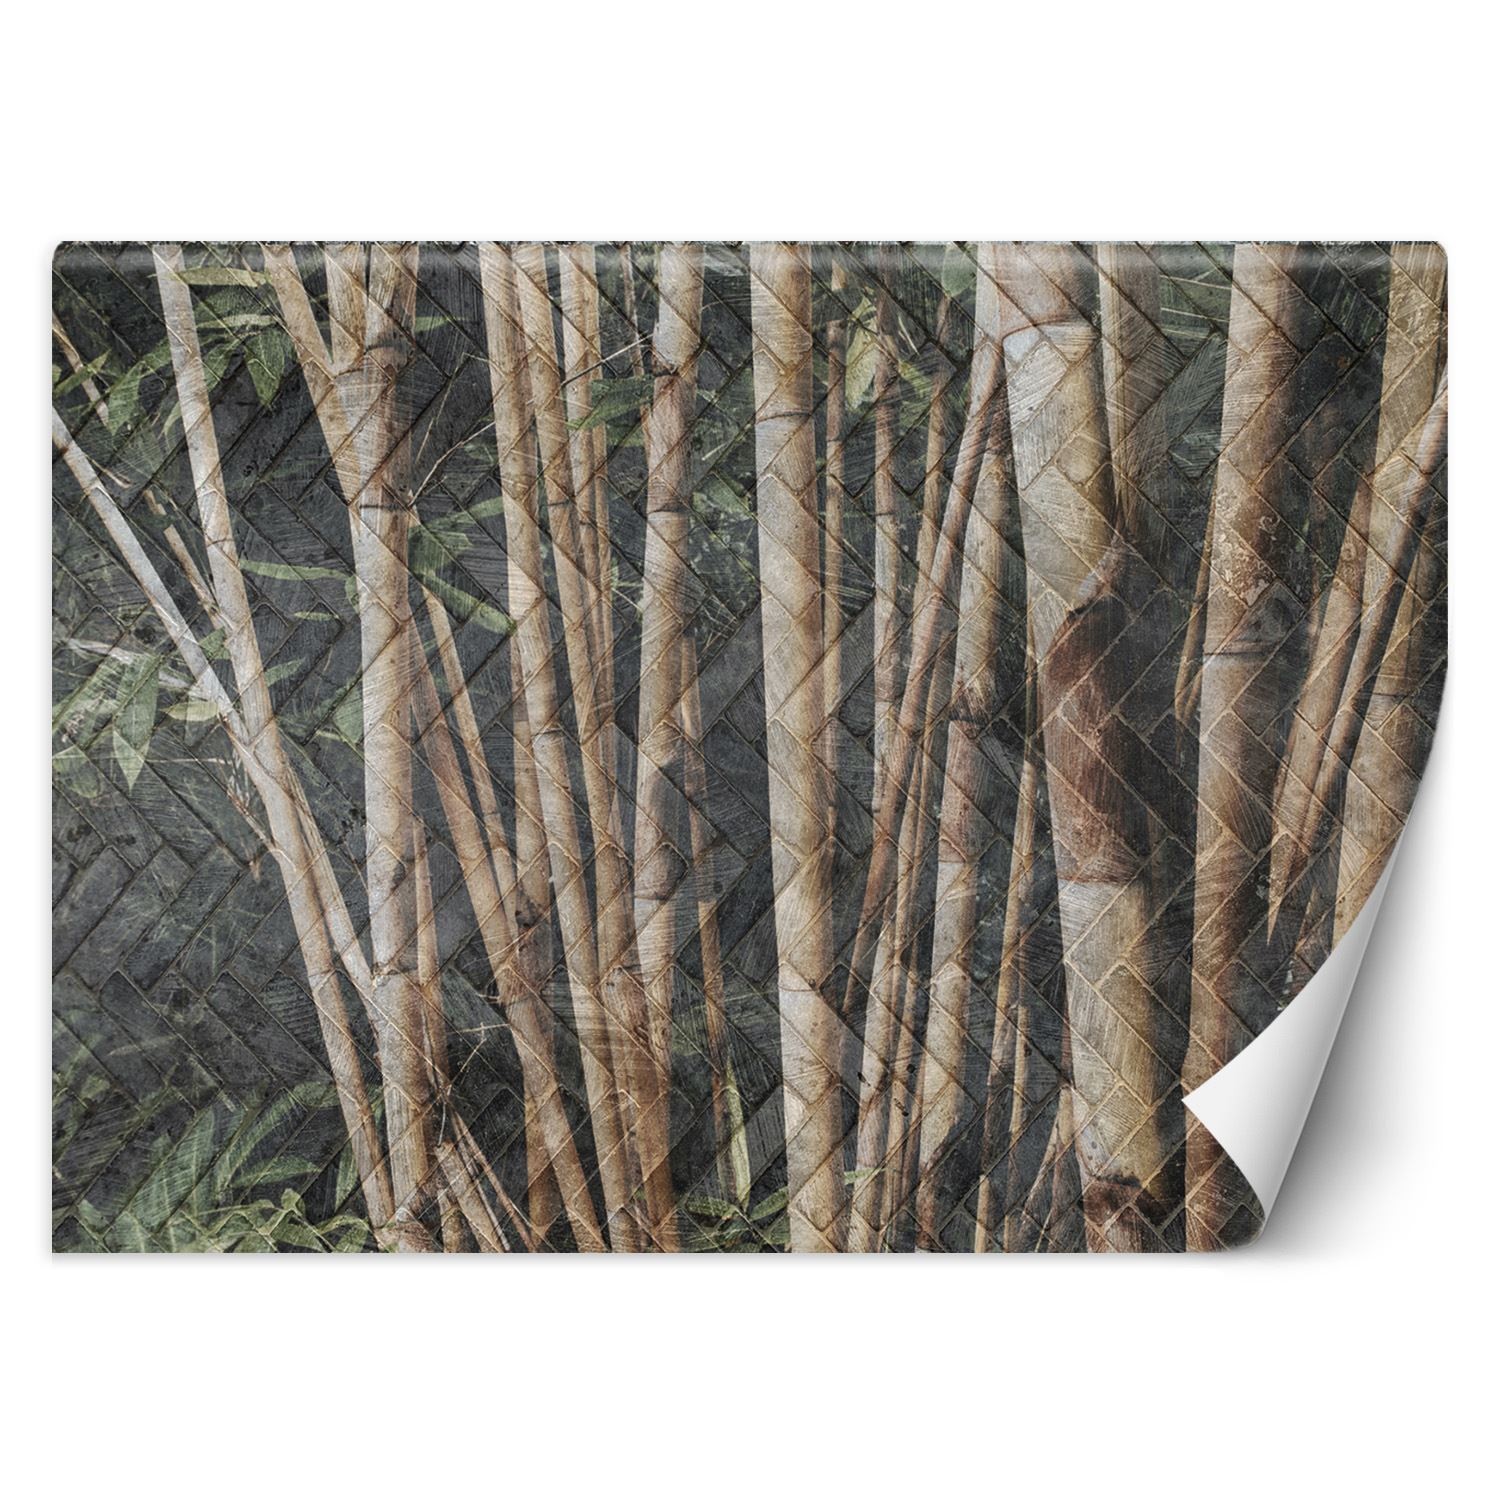 Trend24 – Behang – Bamboo Forest – Vliesbehang – Behang Woonkamer – Fotobehang – 350x245x2 cm – Incl. behanglijm